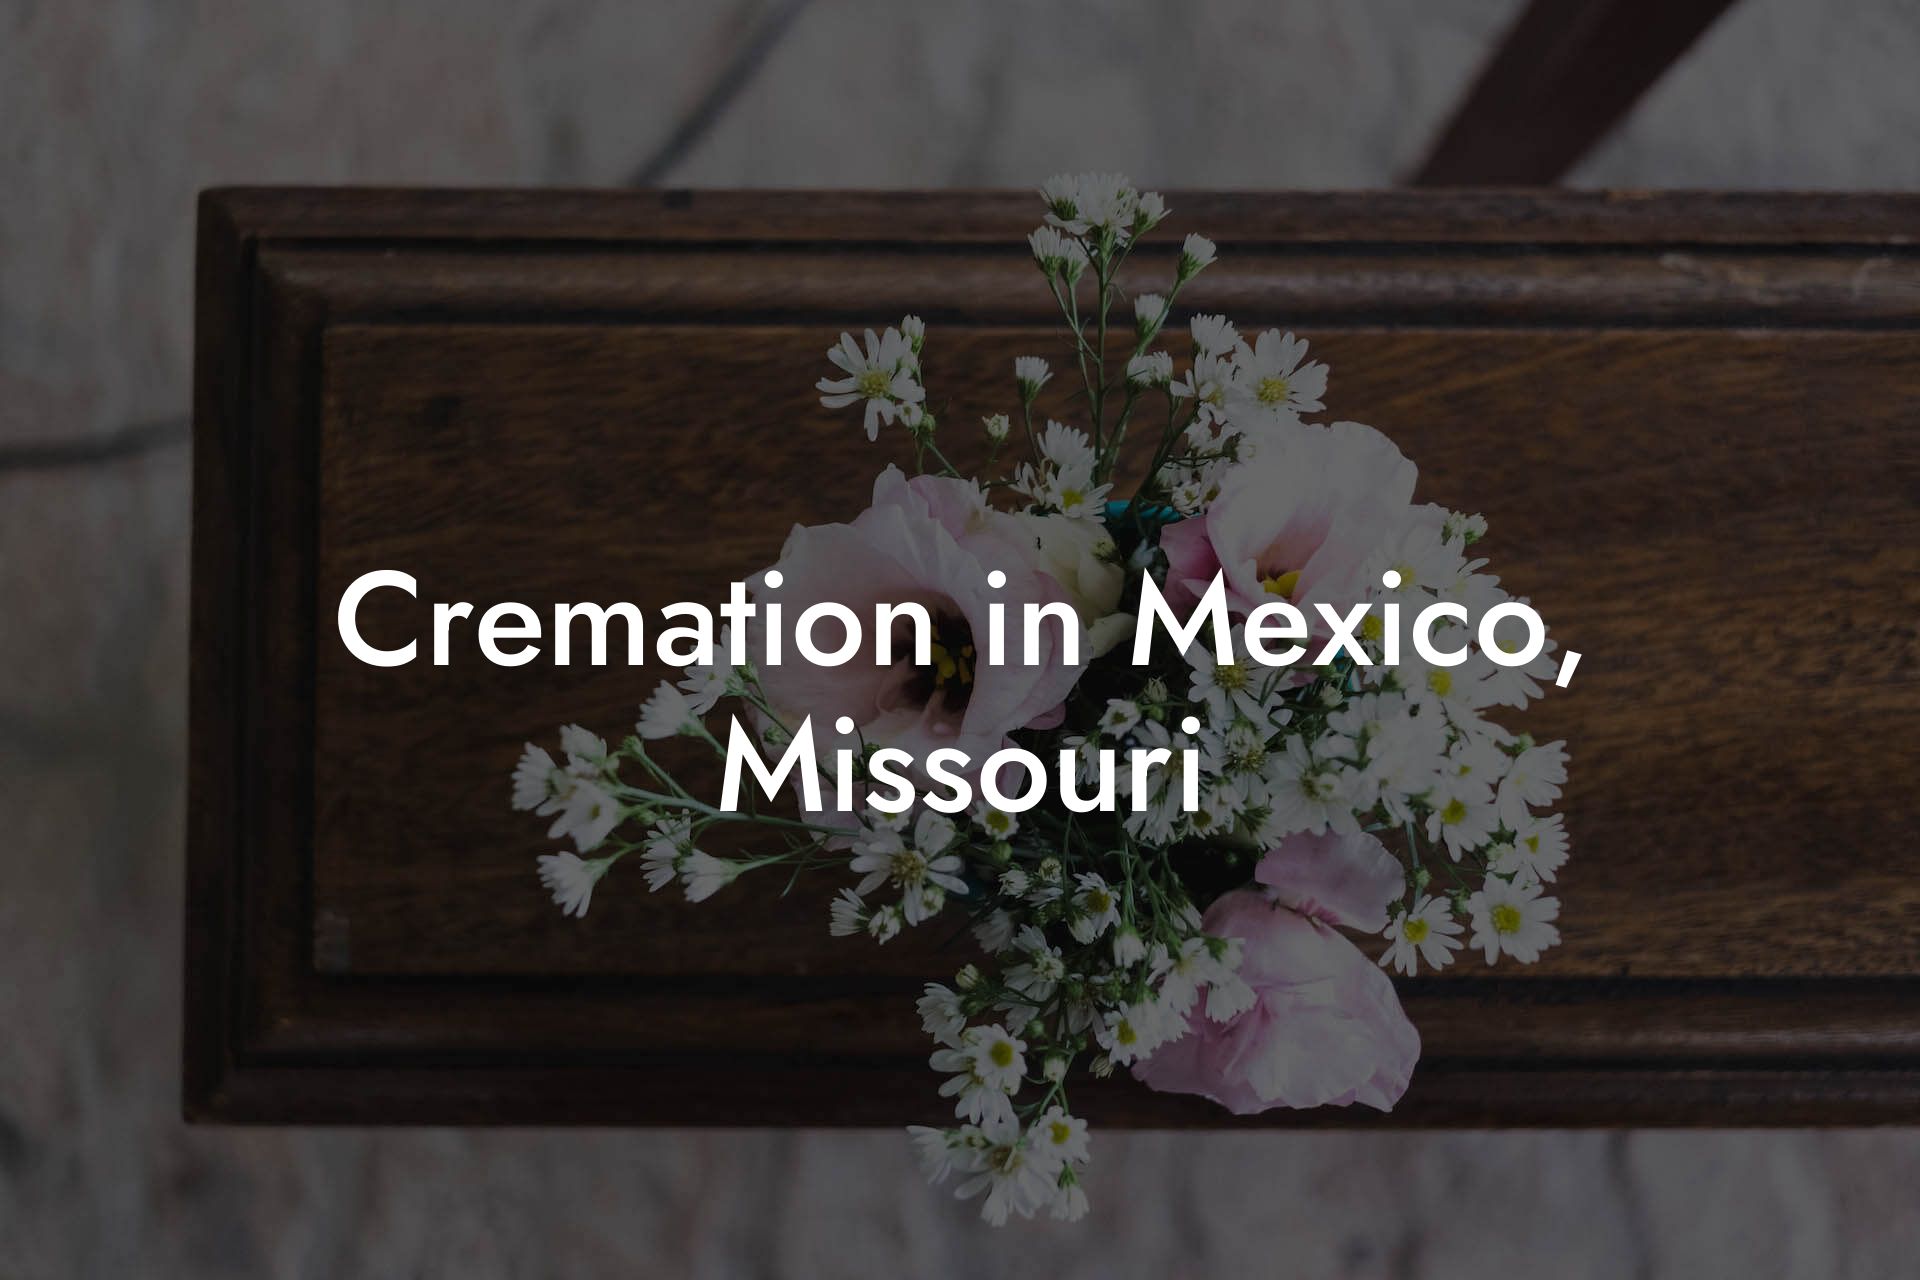 Cremation in Mexico, Missouri